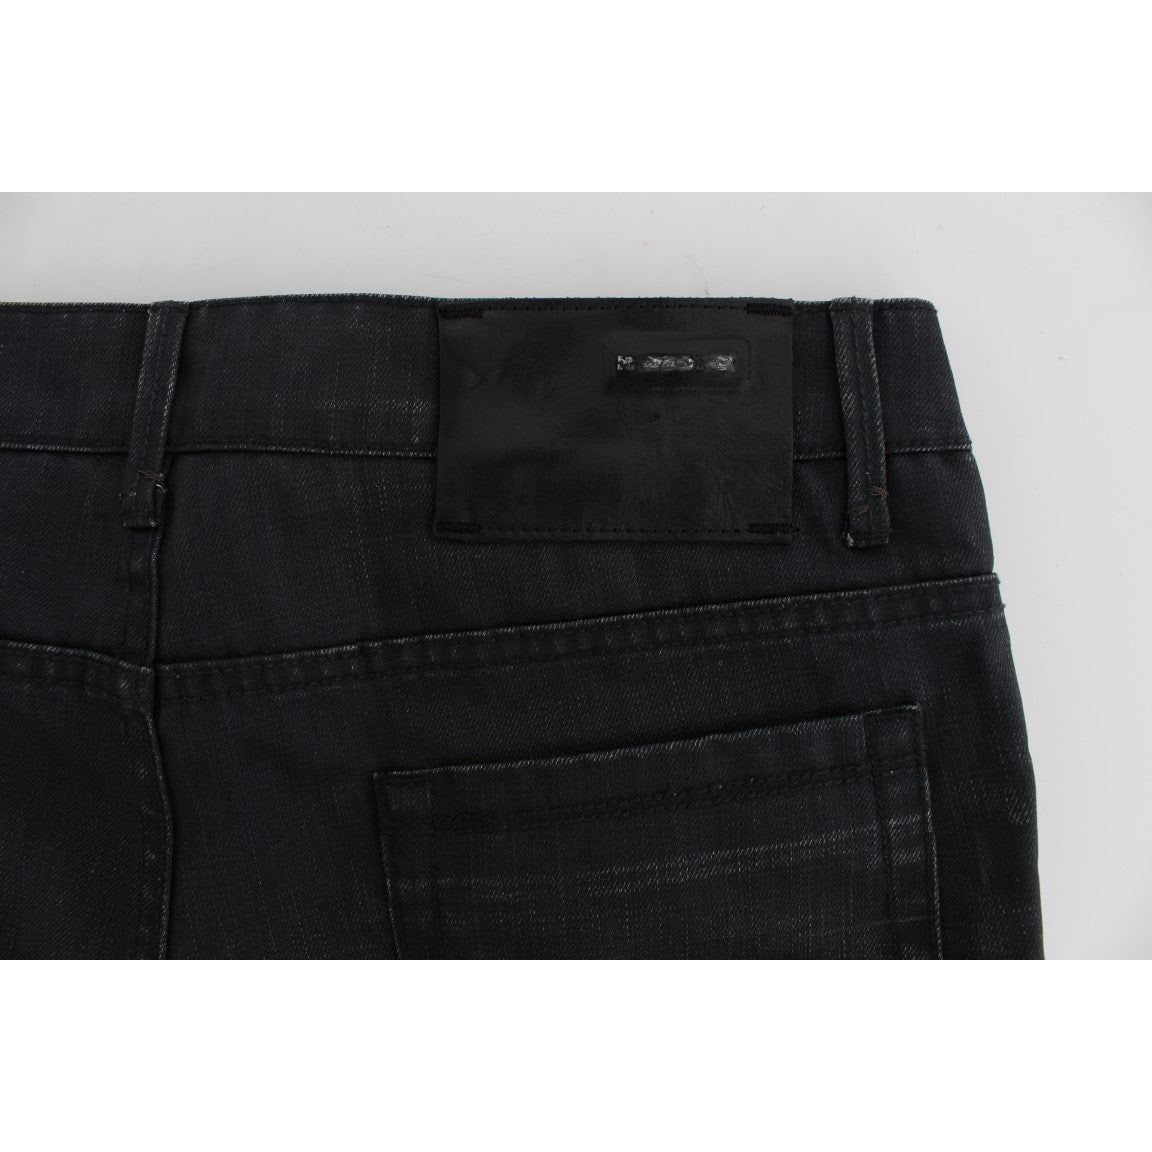 Acht Sleek Gray Slim Fit Italian Mens Jeans gray-cotton-skinny-slim-fit-jeans 298809-gray-cotton-skinny-slim-fit-jeans-7.jpg